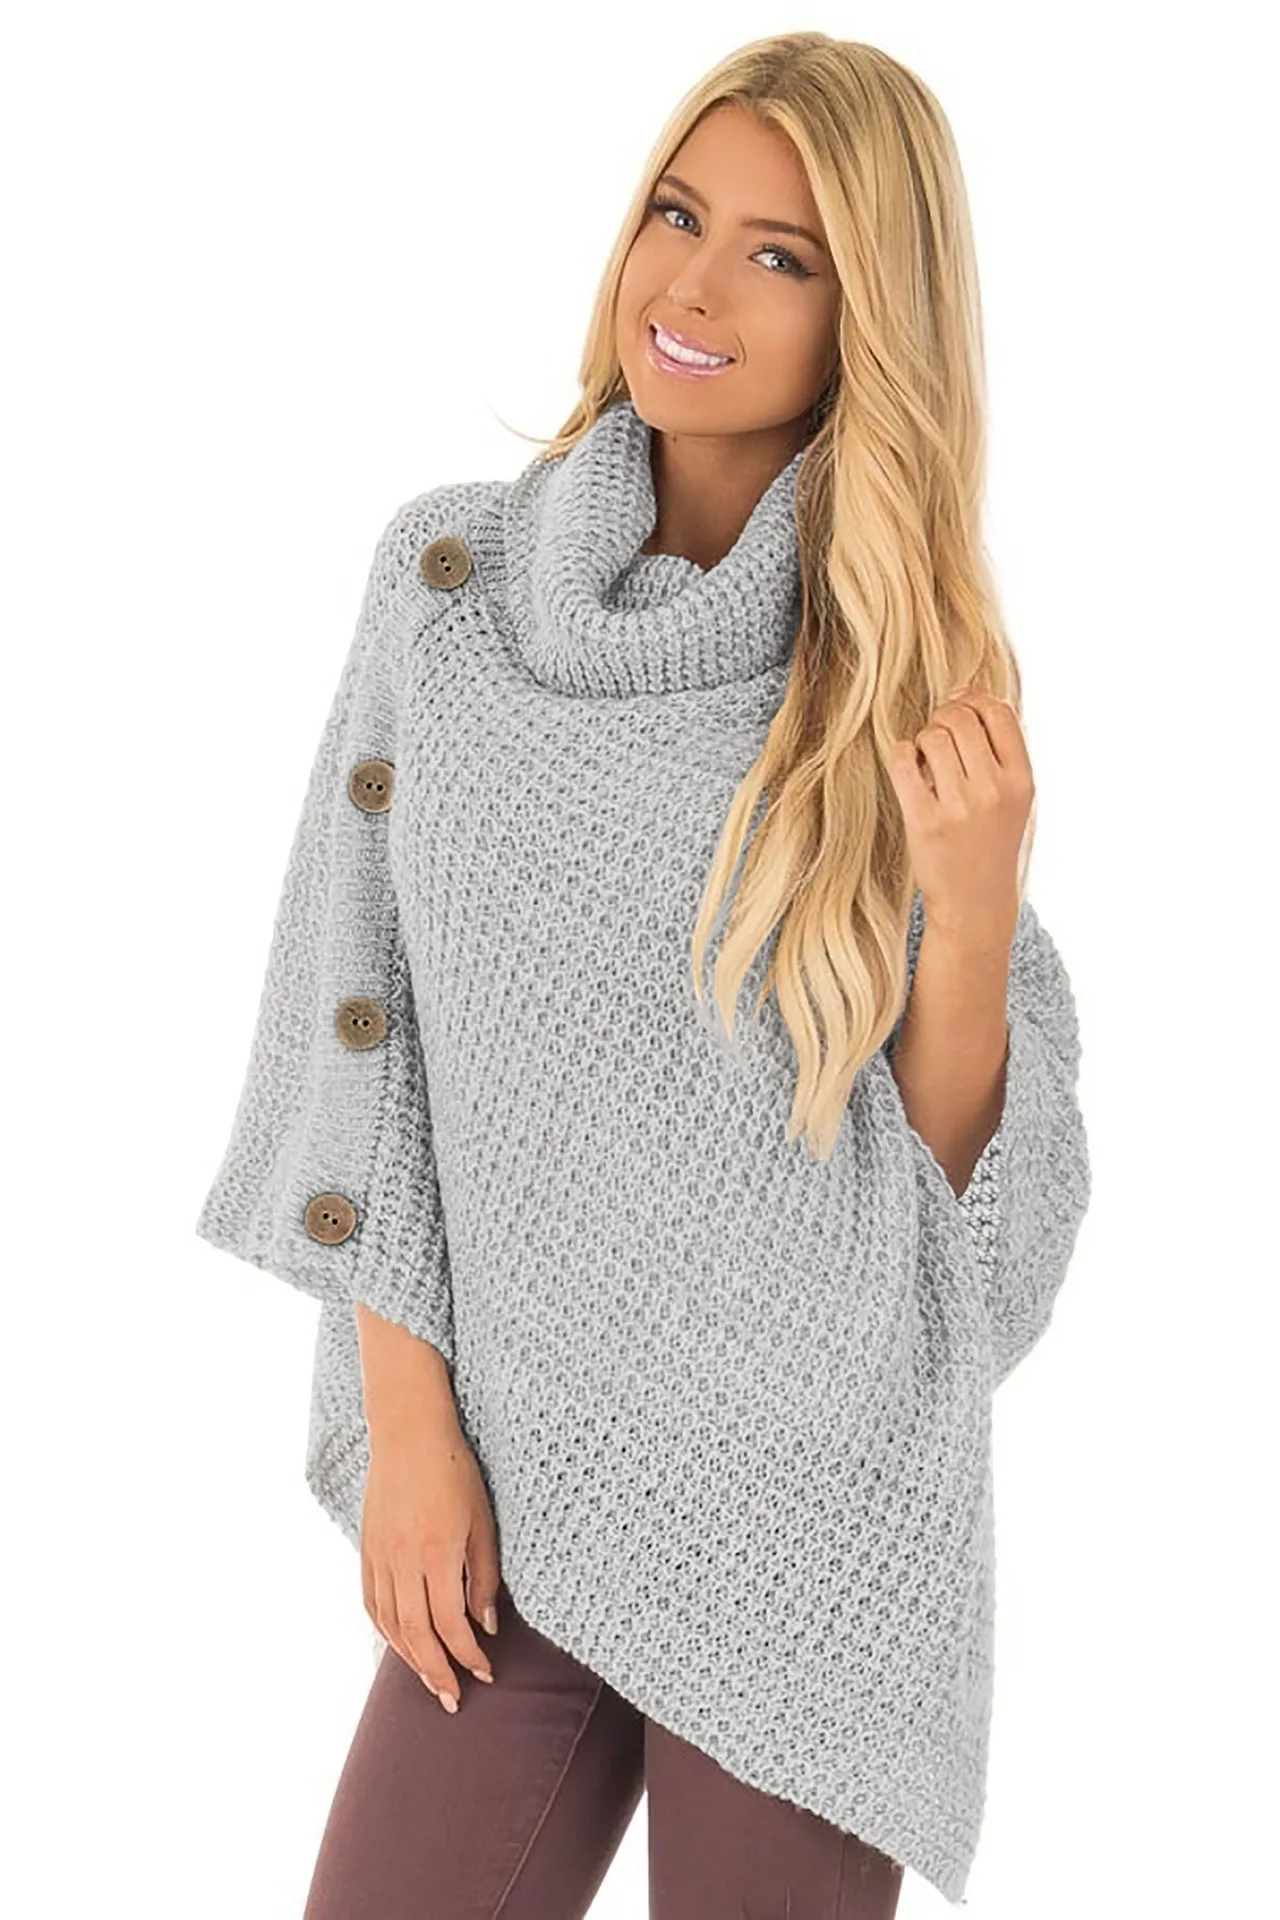 Водолазка Свитера Пуловер женский 2019 зима мода крыло рукав осень кнопка вязаный женский свитер Харадзюку